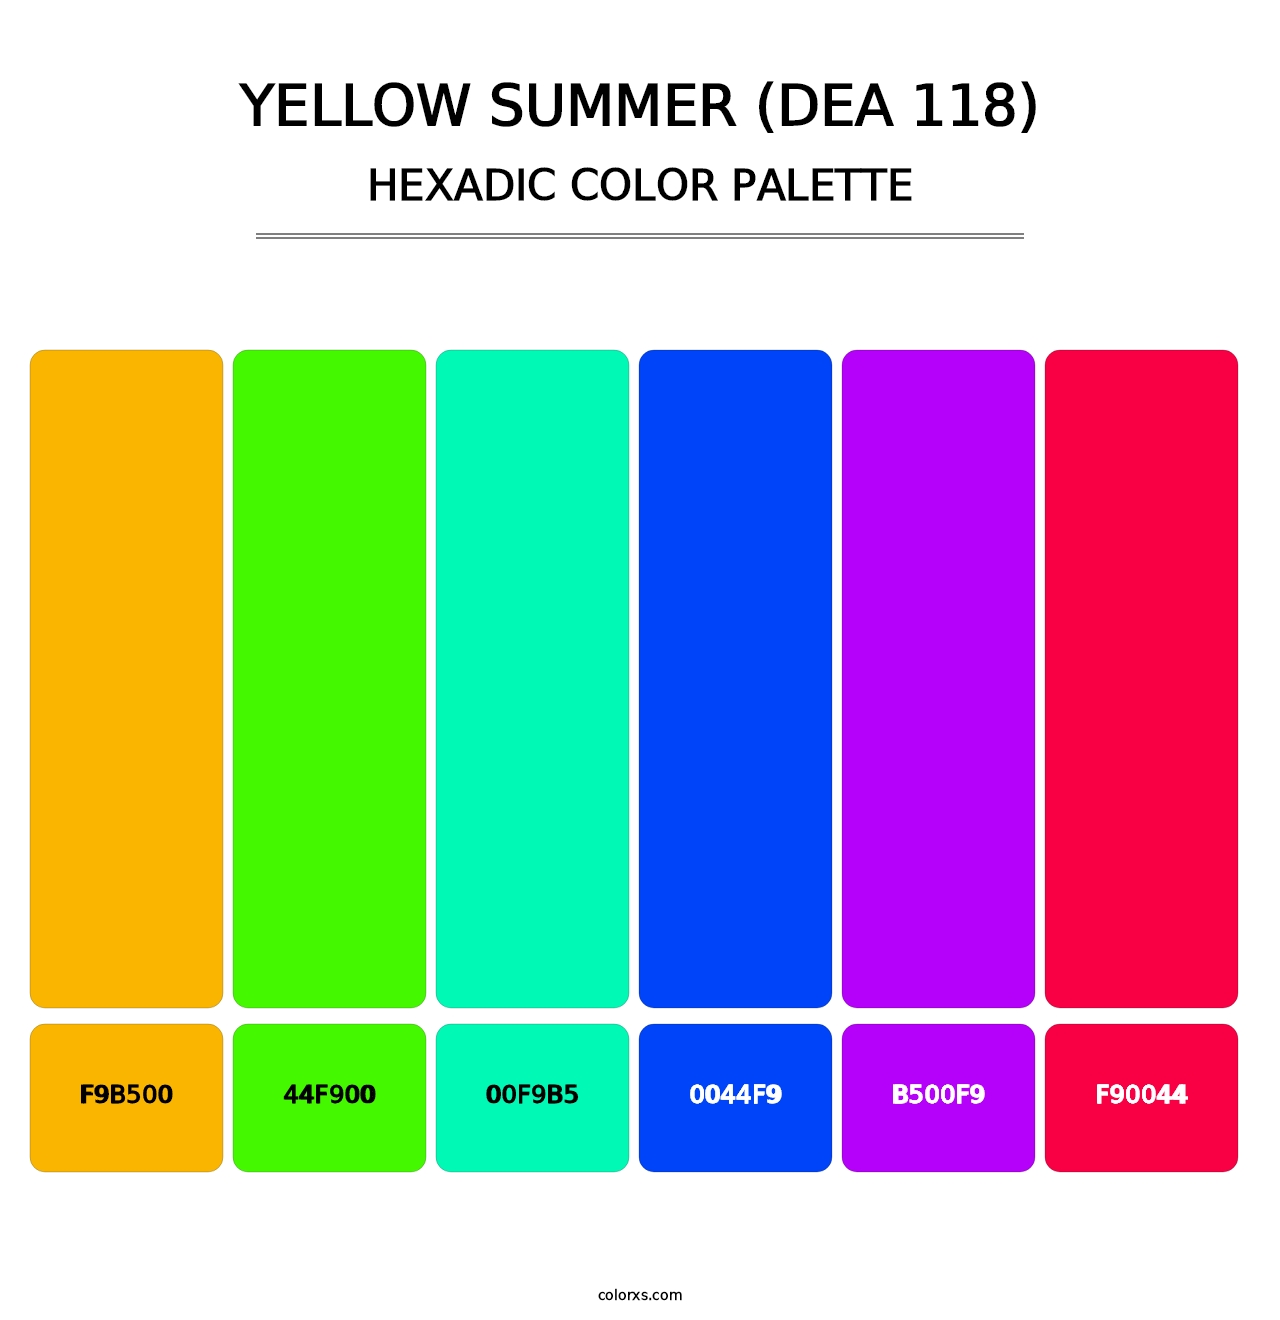 Yellow Summer (DEA 118) - Hexadic Color Palette